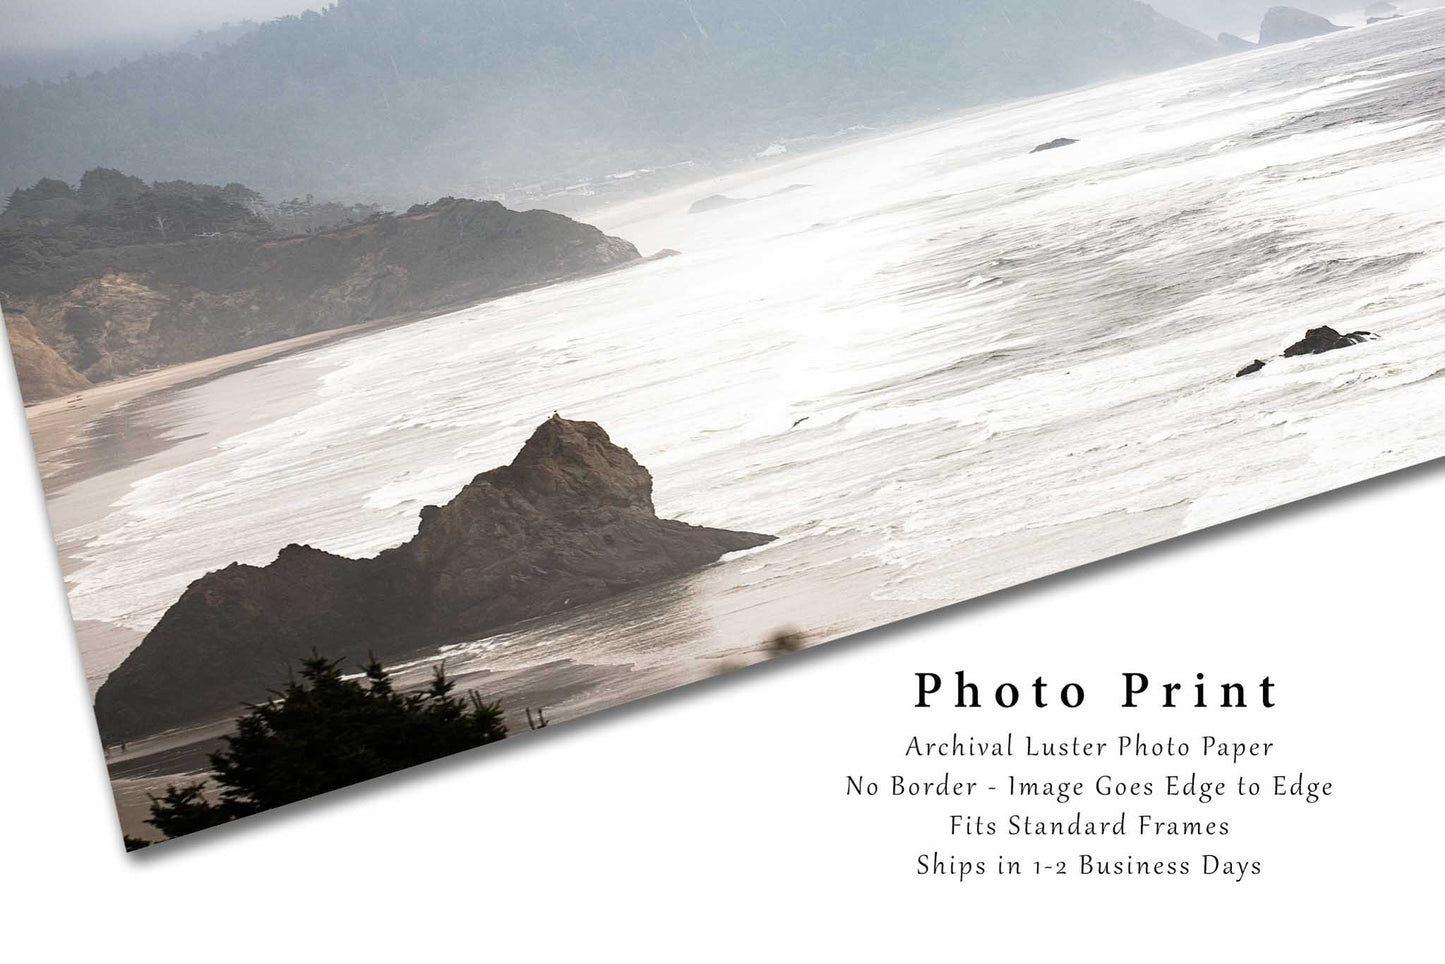 Pacific Northwest Photography Print - Picture of Waves Crashing on Beach in Fog Along Oregon Coast - Coastal Wall Art Photo Artwork Decor